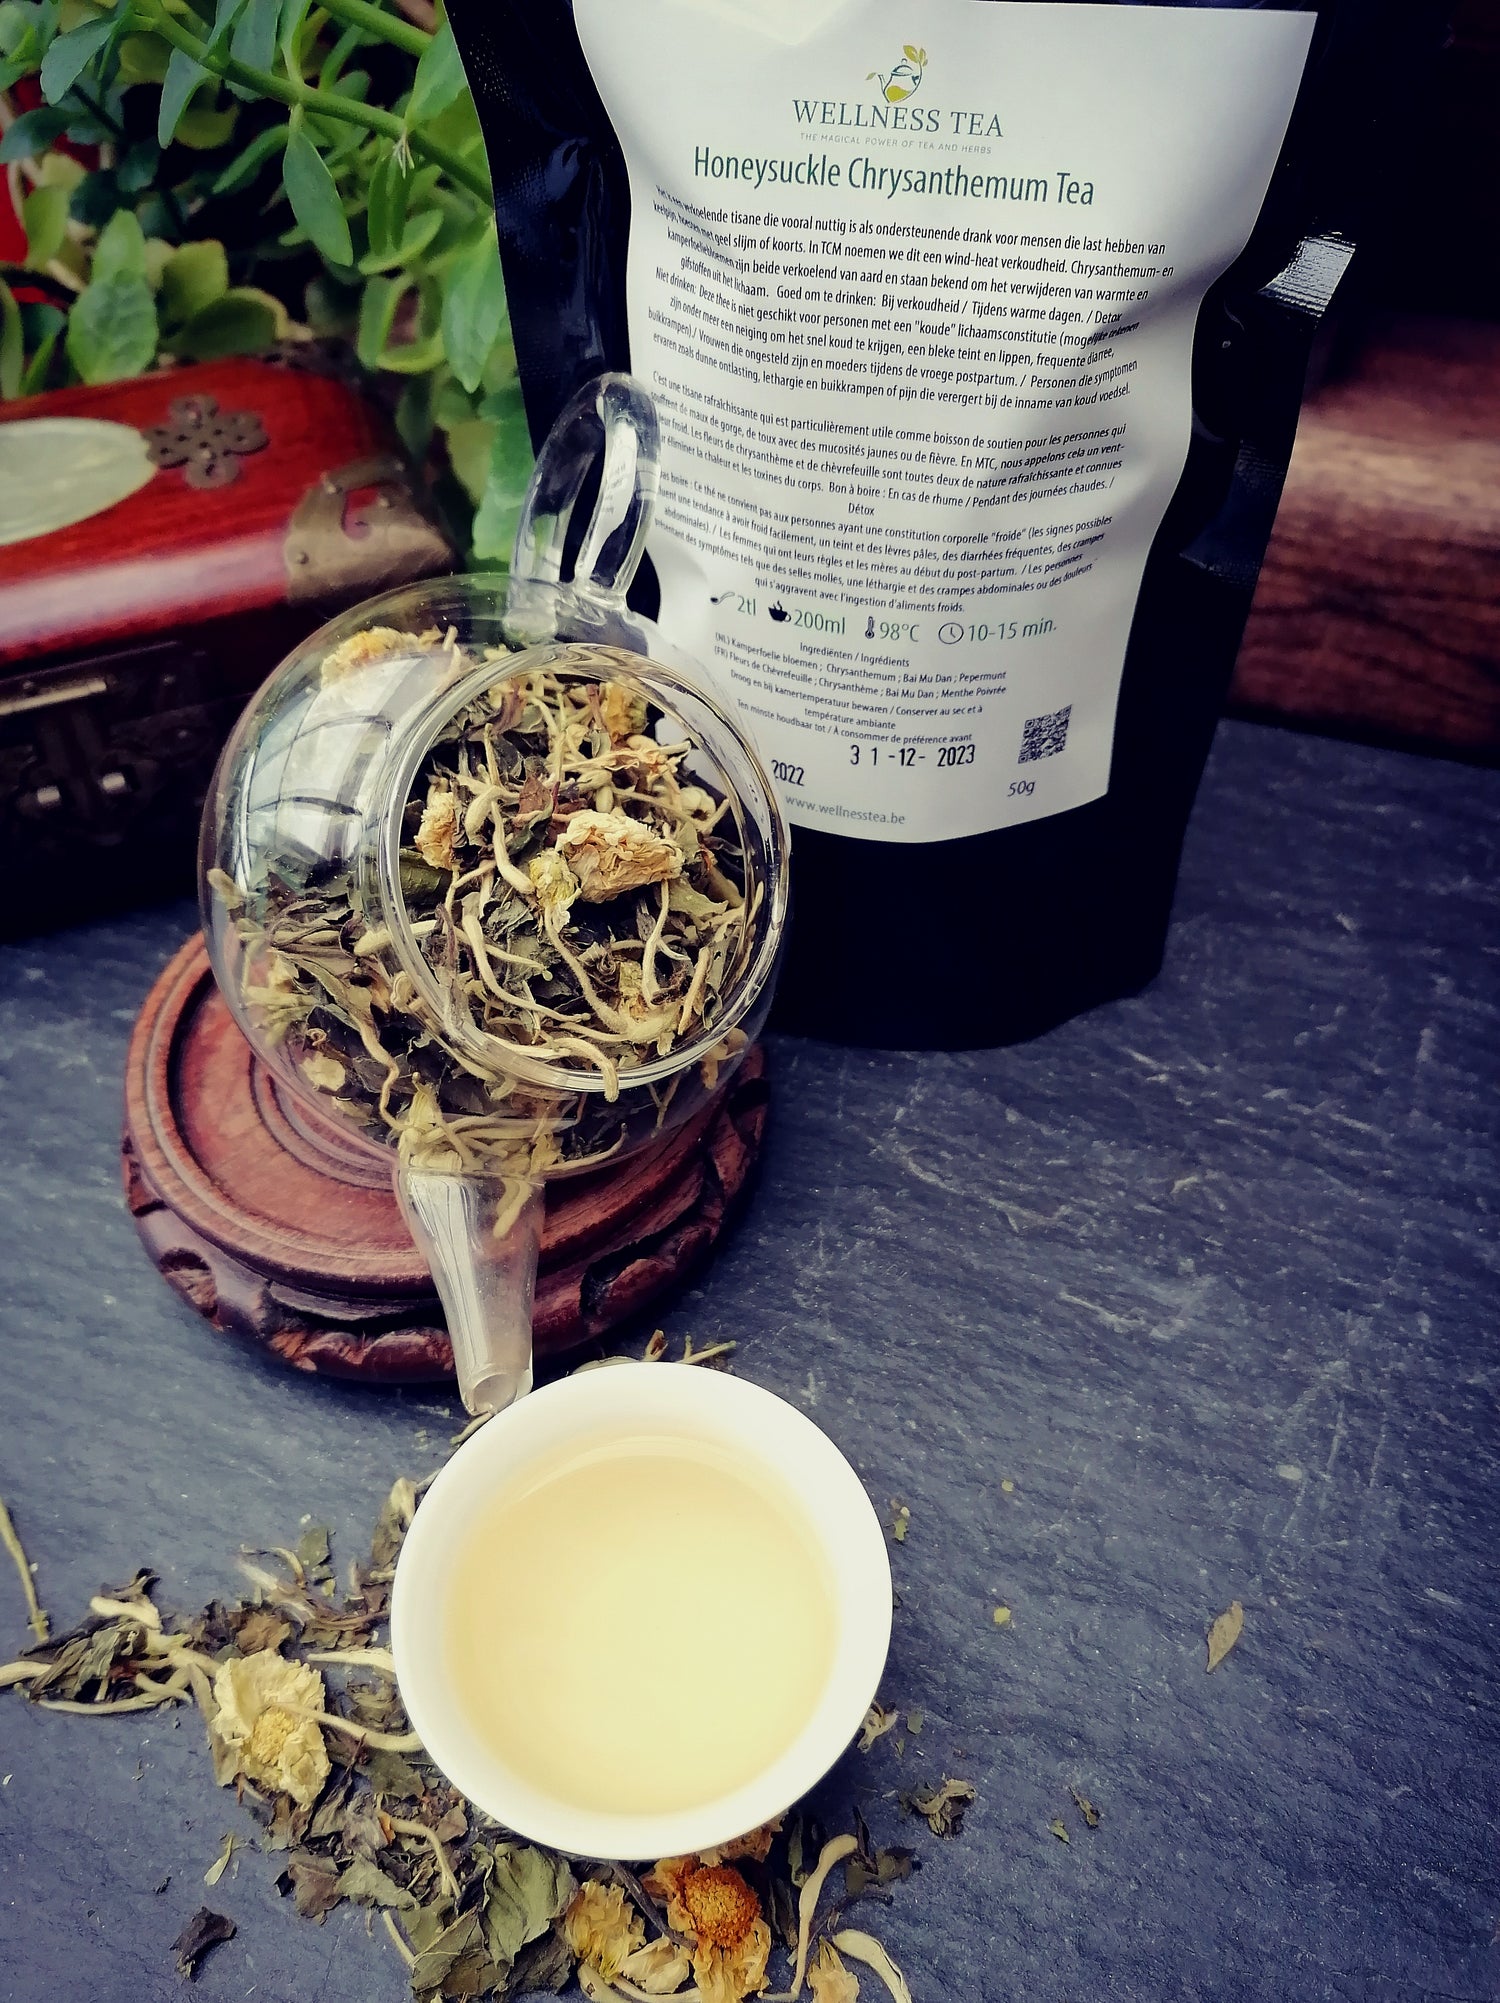 Honeysuckle Chrysanthemum Tea